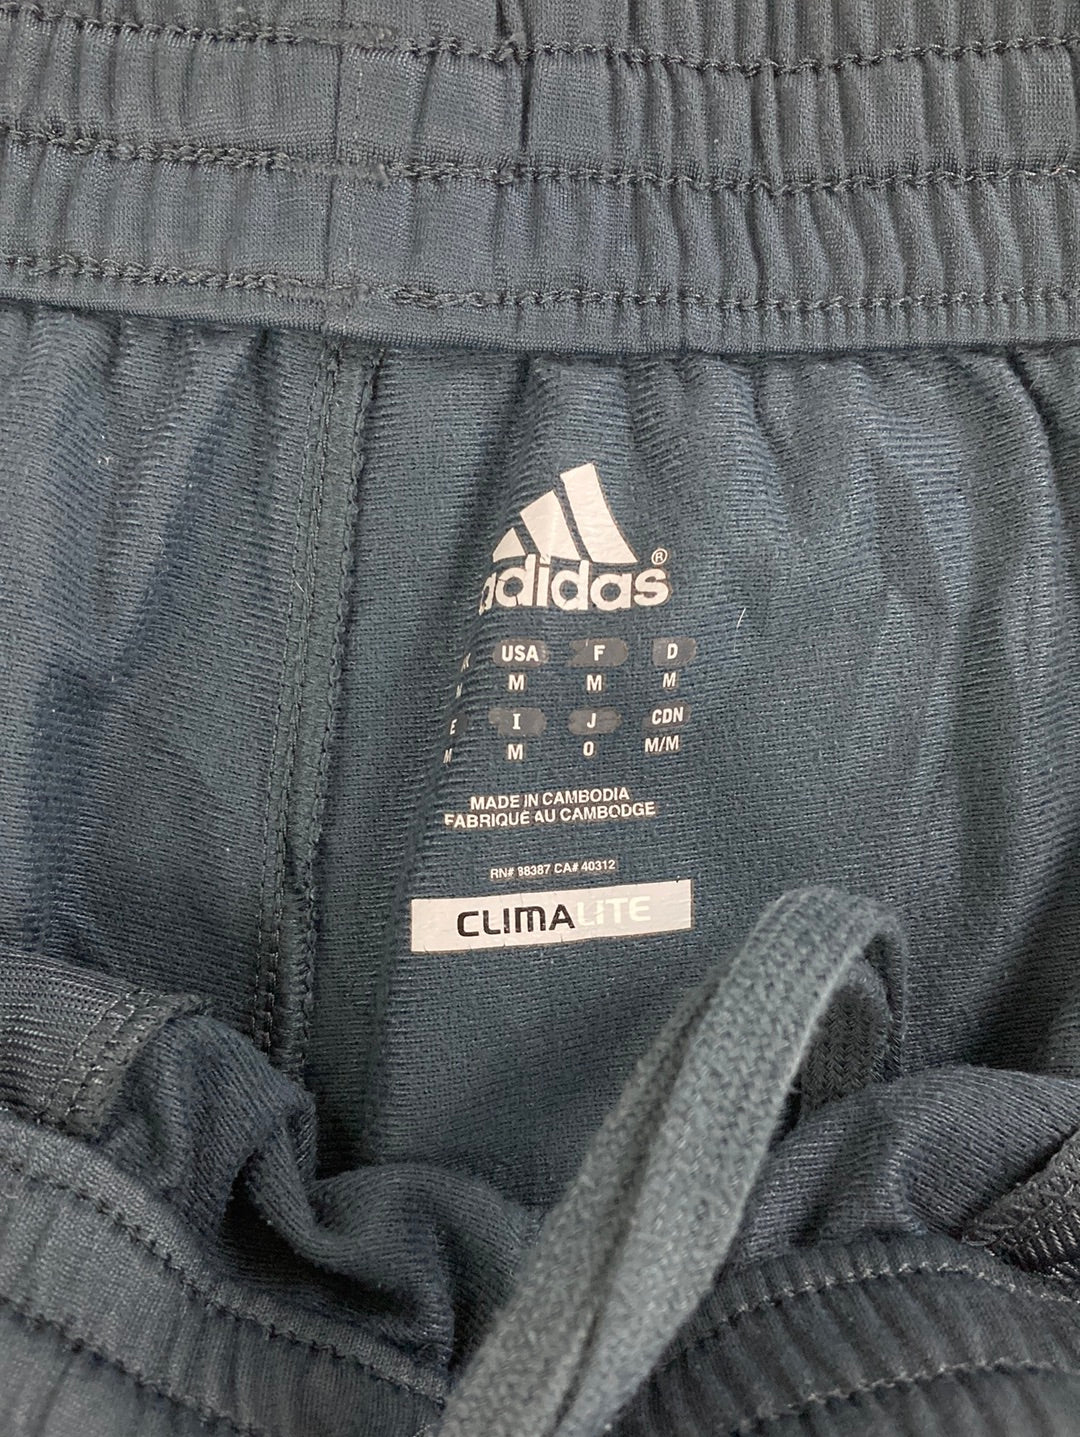 Adidas Trackpants (M)